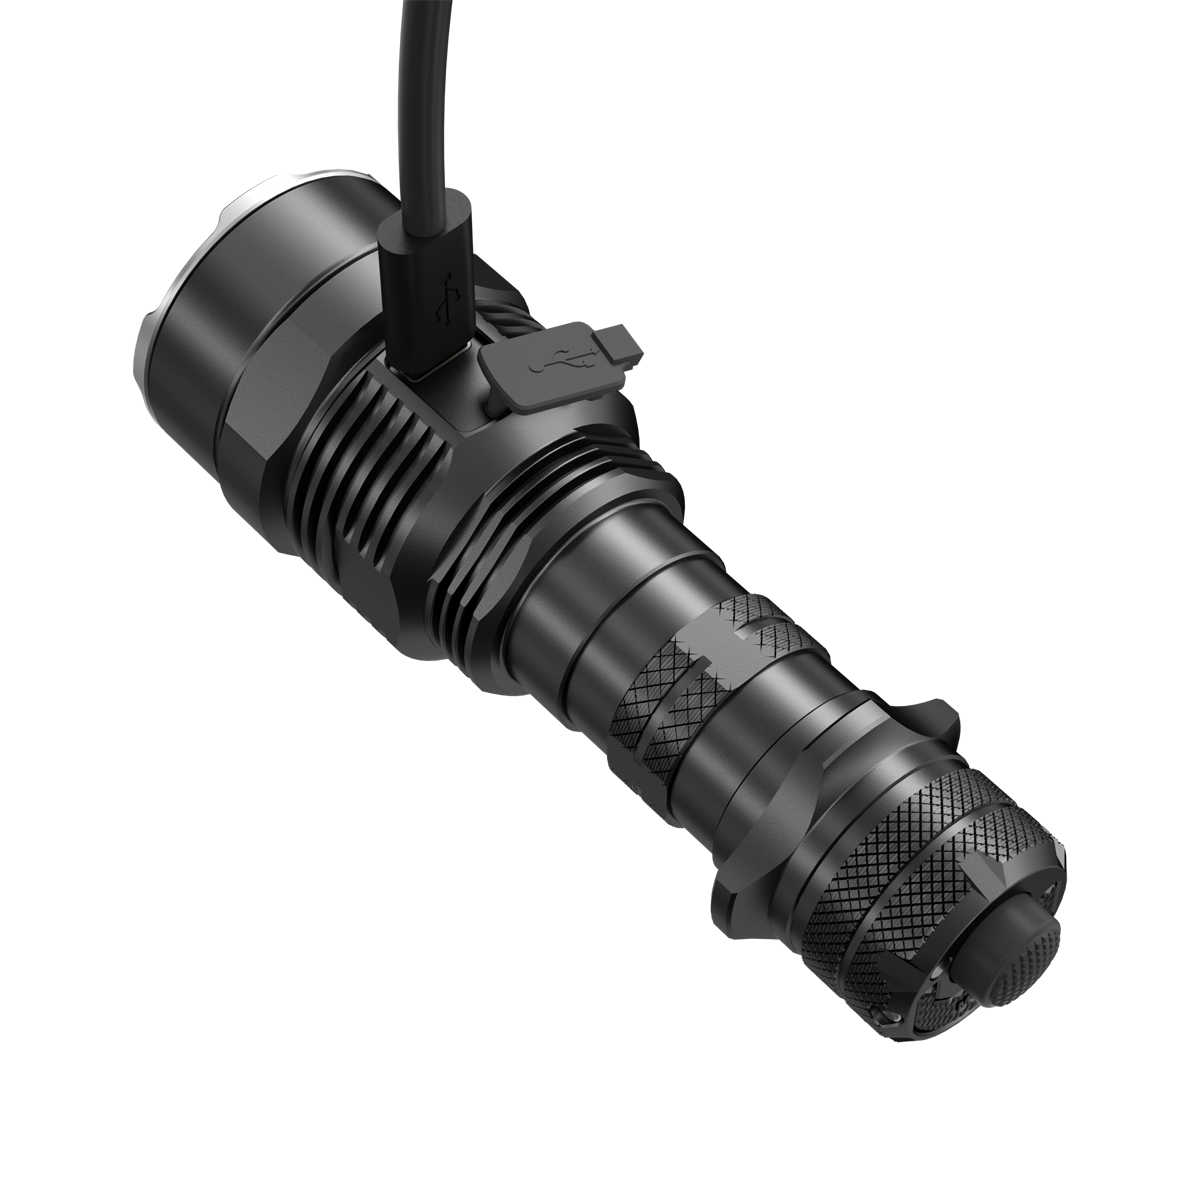 Nitecore TM9K LTP 9 x  XP-L2 HD LED 9800 Lumens Rechargeable Flashlight for Low Temperature Search Light